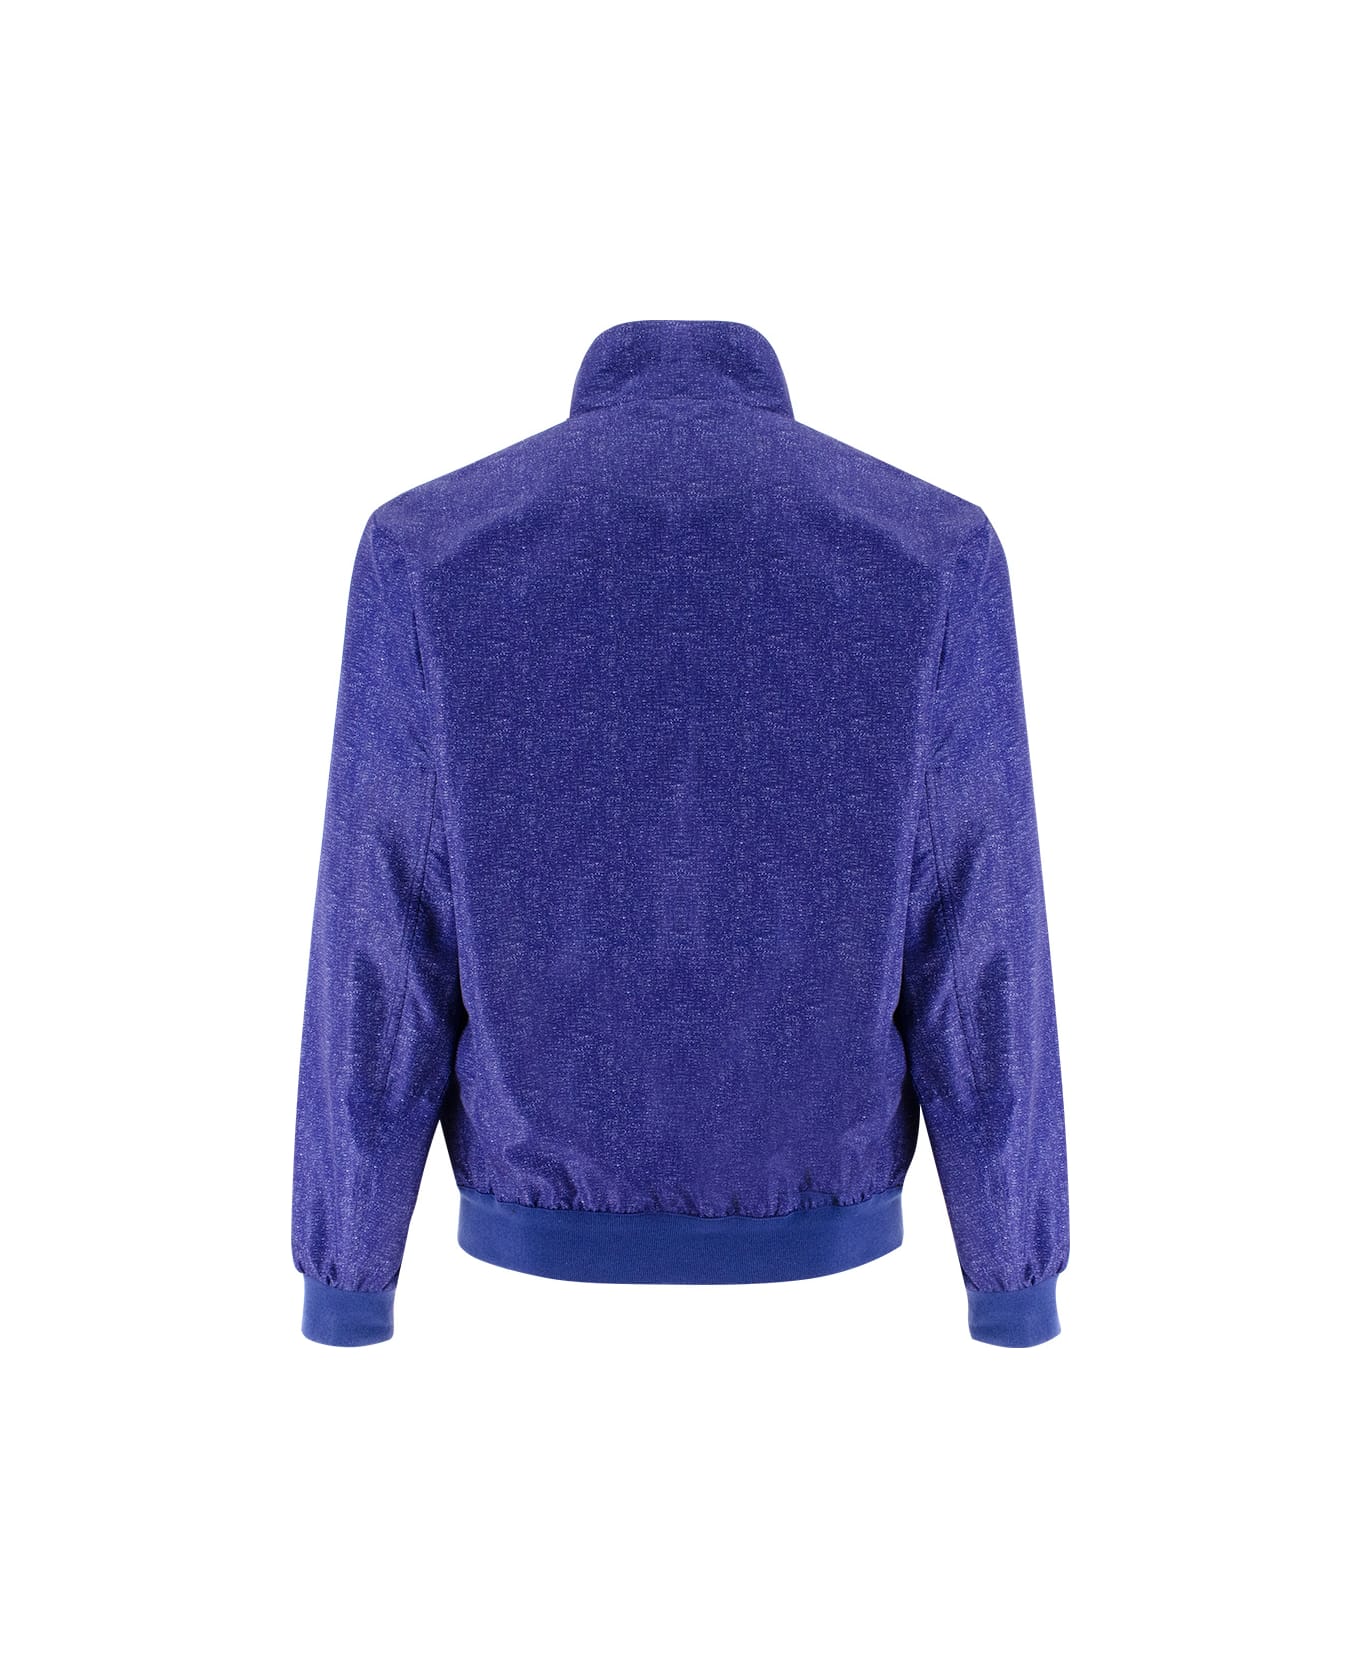 Kiton Jacket - BLUE